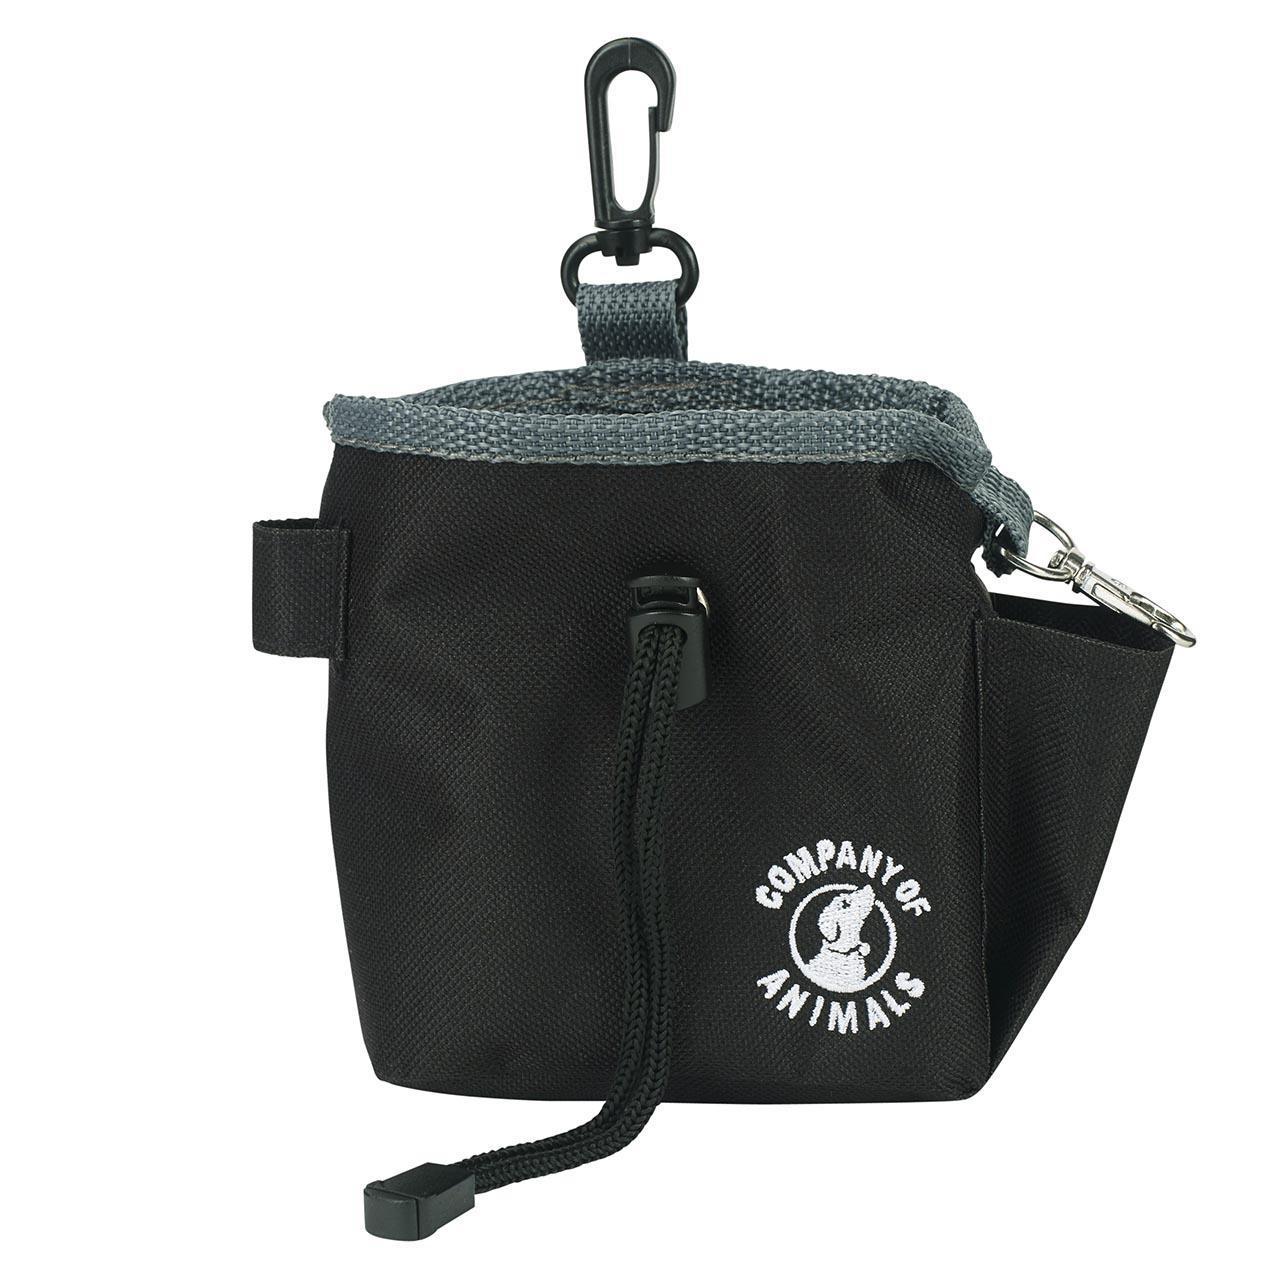 Company of Animals Coachies Treat Bag